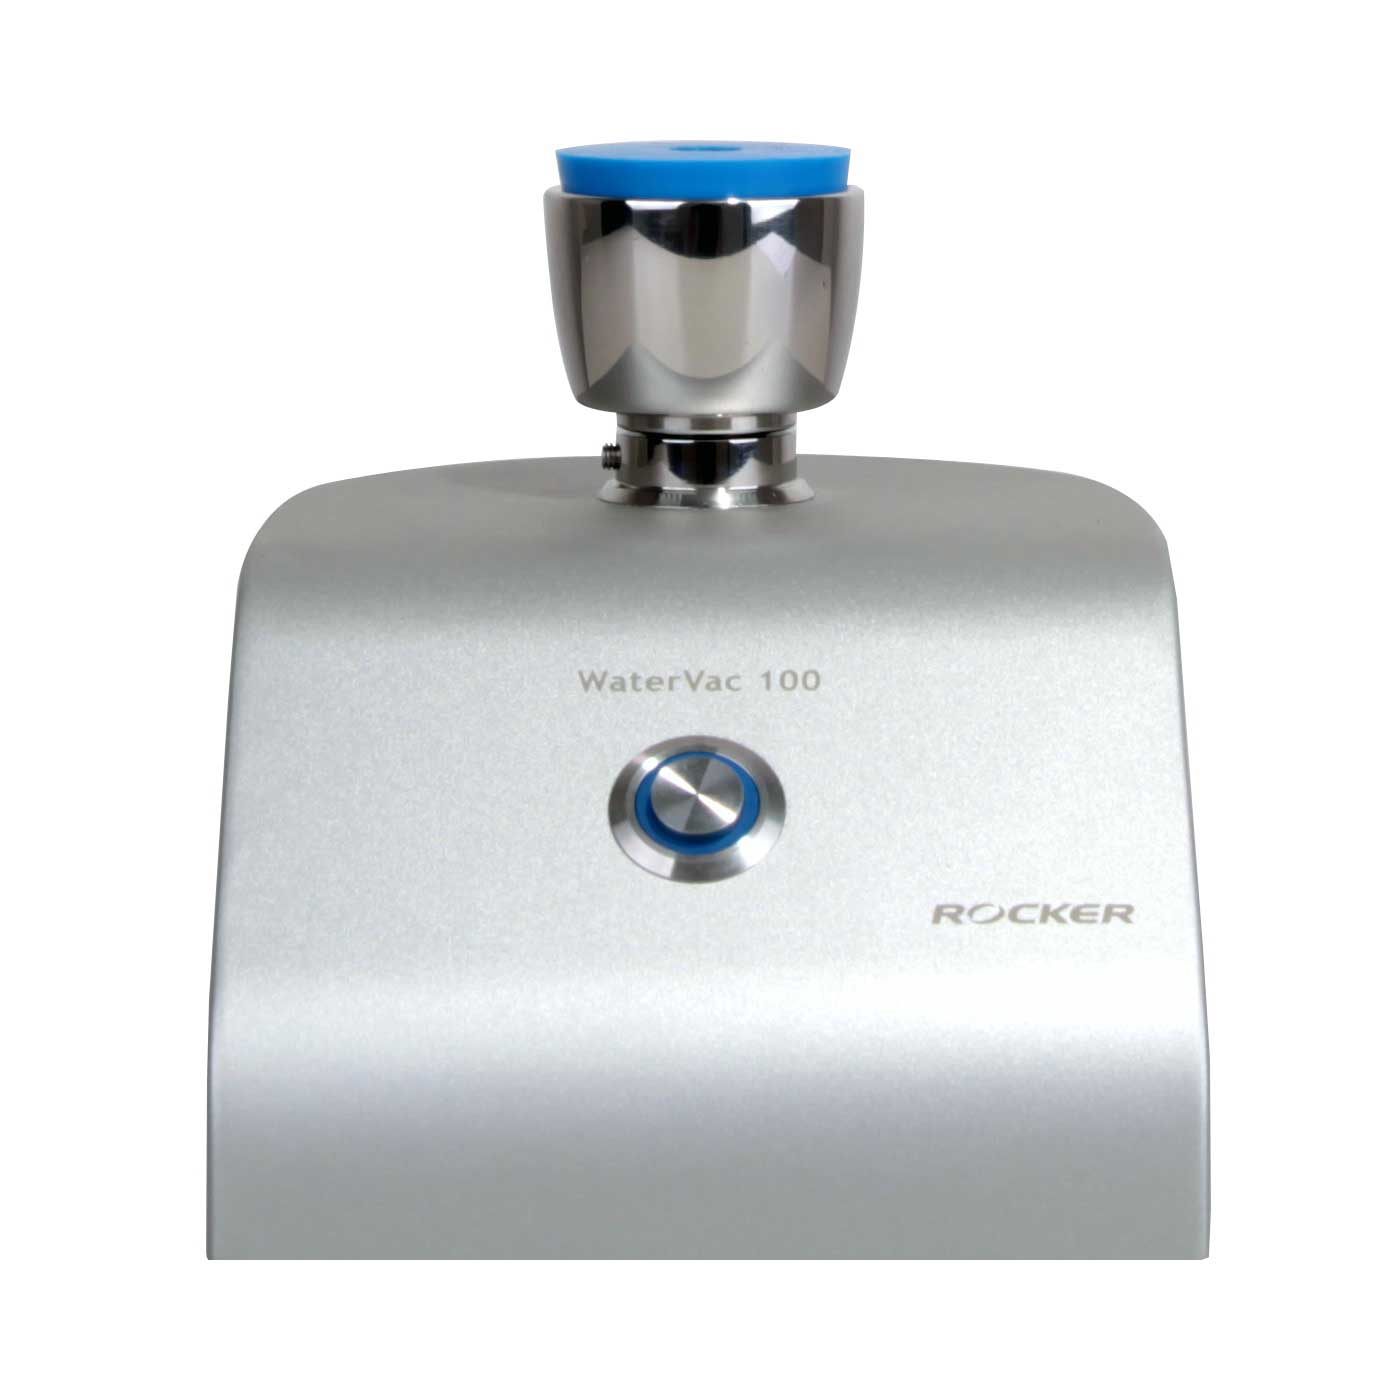 Sistema de filtración Watervac100 para embudos de acero, polipropileno o magnéticos. Entregado con adaptador para tapón de silicona. Caudal máximo de agua (l/min): 0,5. Dimensiones (AlxAnxPr (mm)): 96x120x170. Peso (Kg): 1,16. FILTER-LAB.